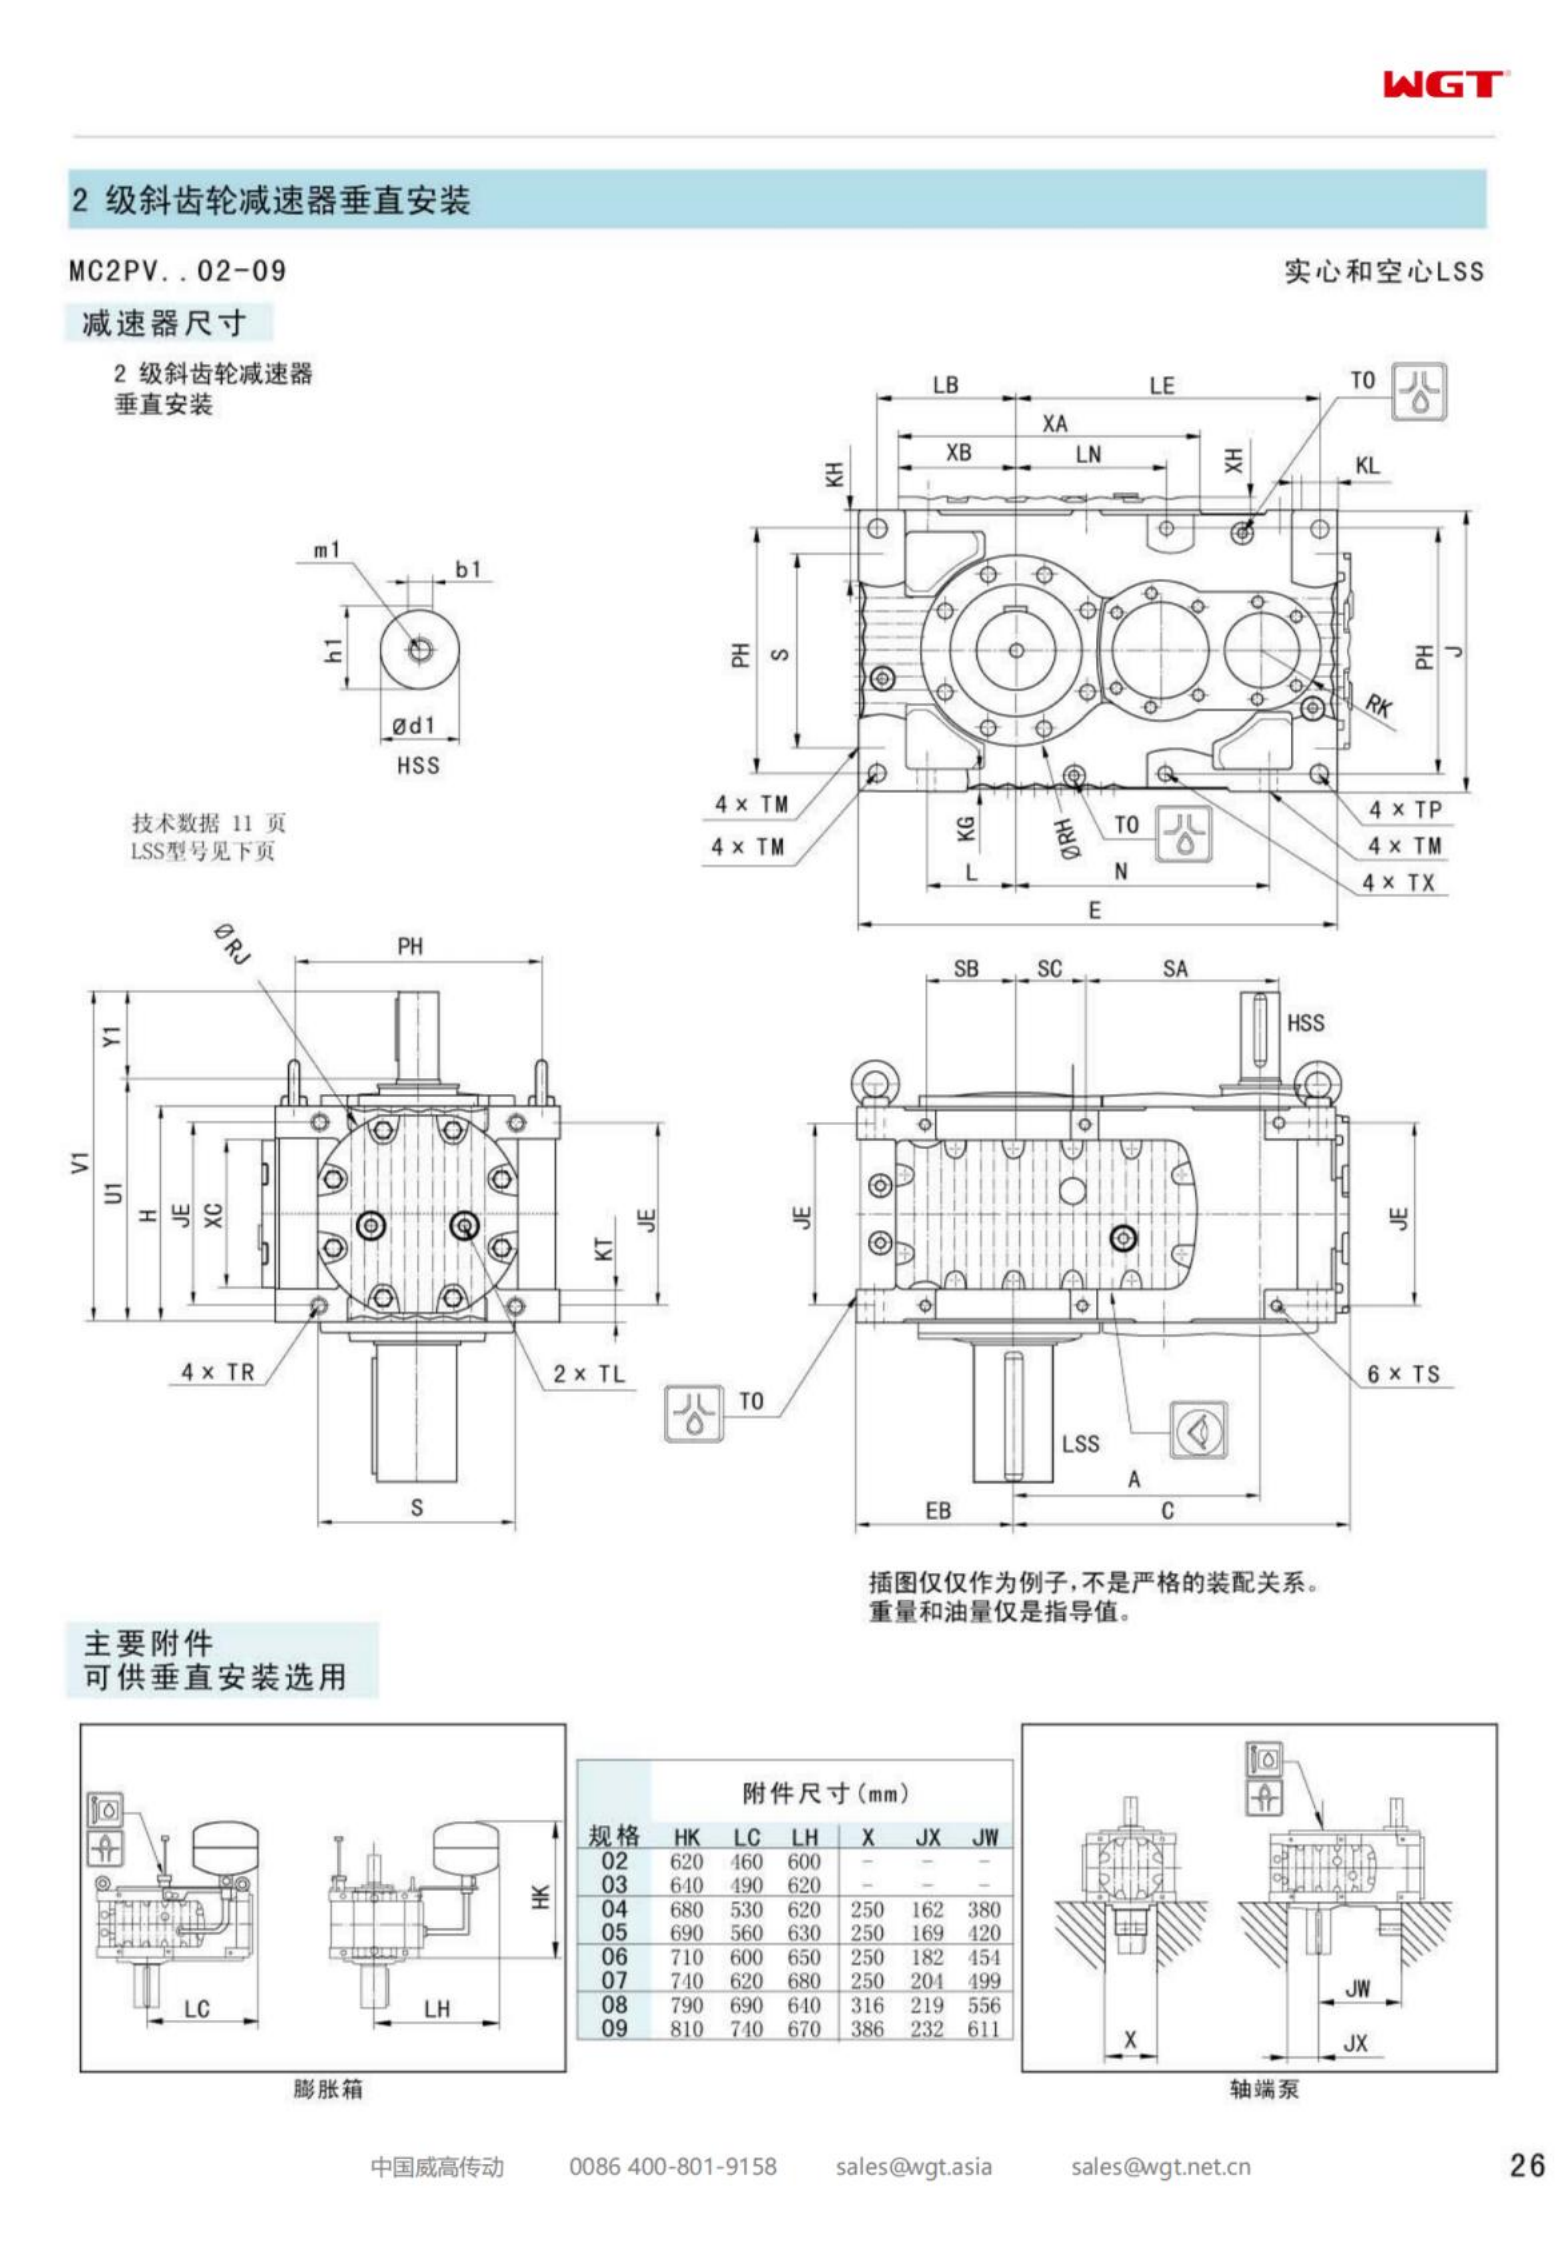 MC2PVST06 replaces _SEW_MC_Series gearbox (patent)